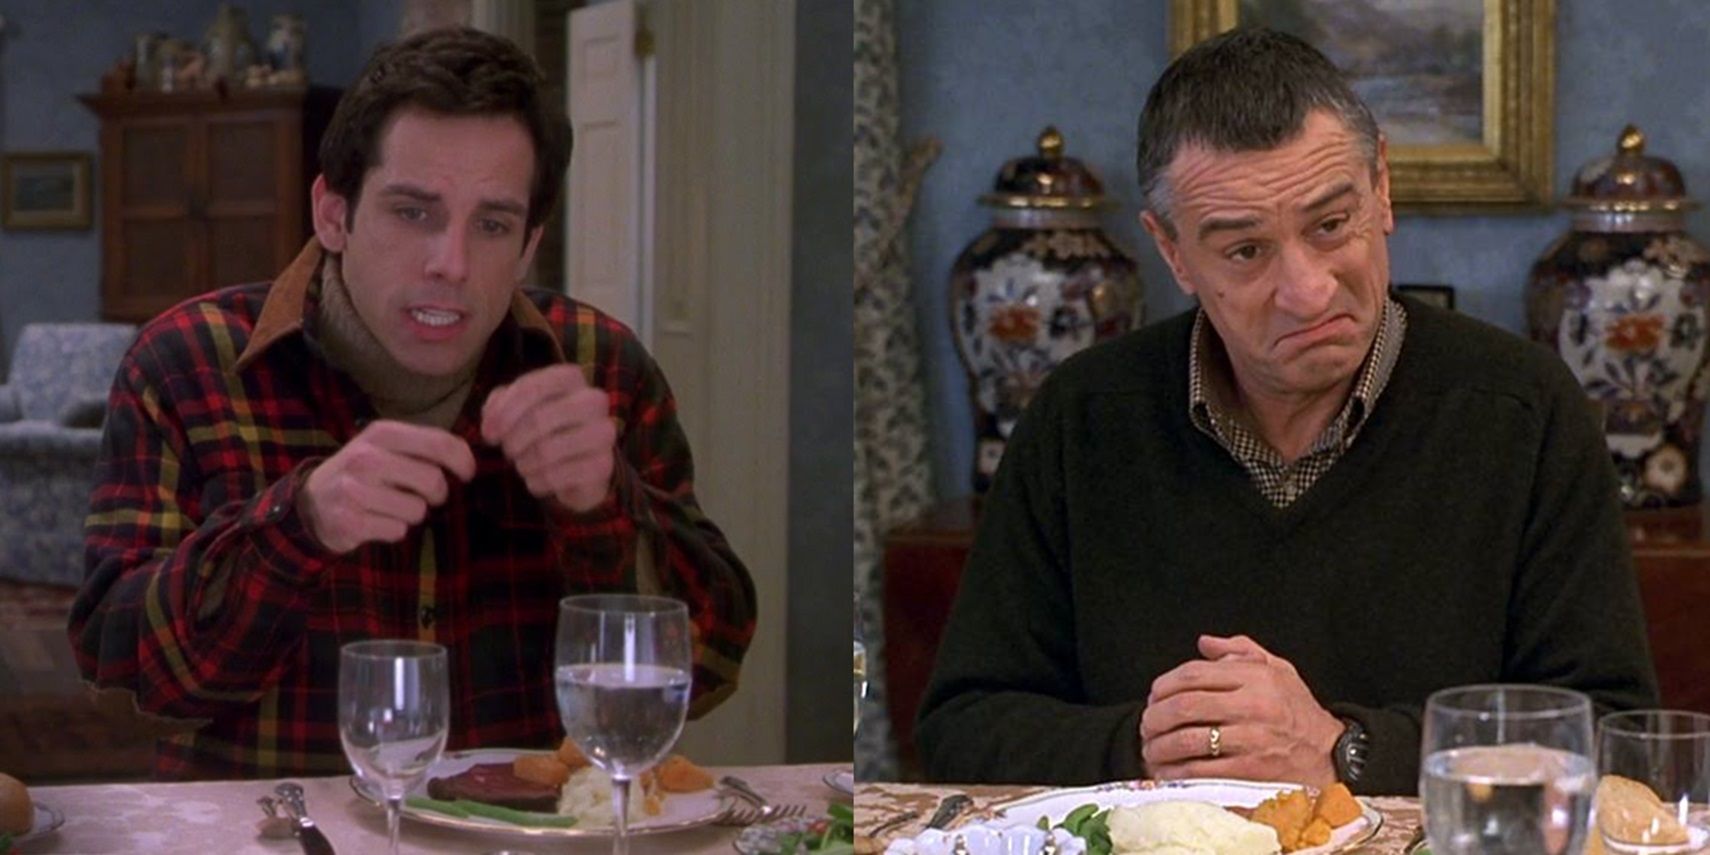 Ben Stiller pretending to milk a cat and Robert De Niro eating dinner in Meet the Parents